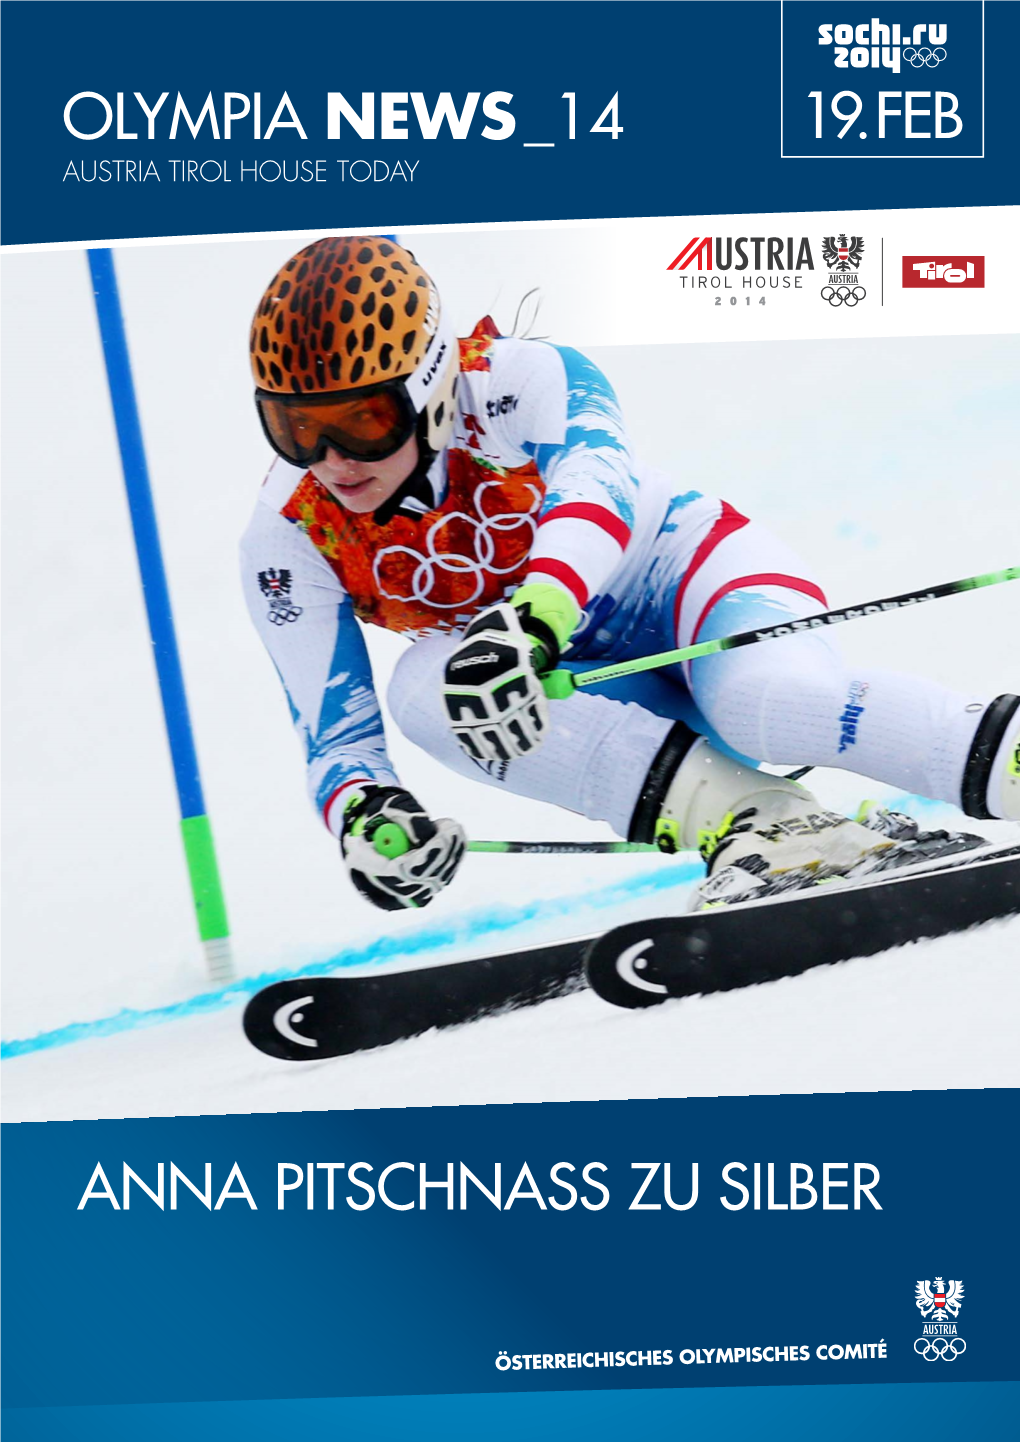 Anna Pitschnass Zu Silber 19. Feb Olympia News